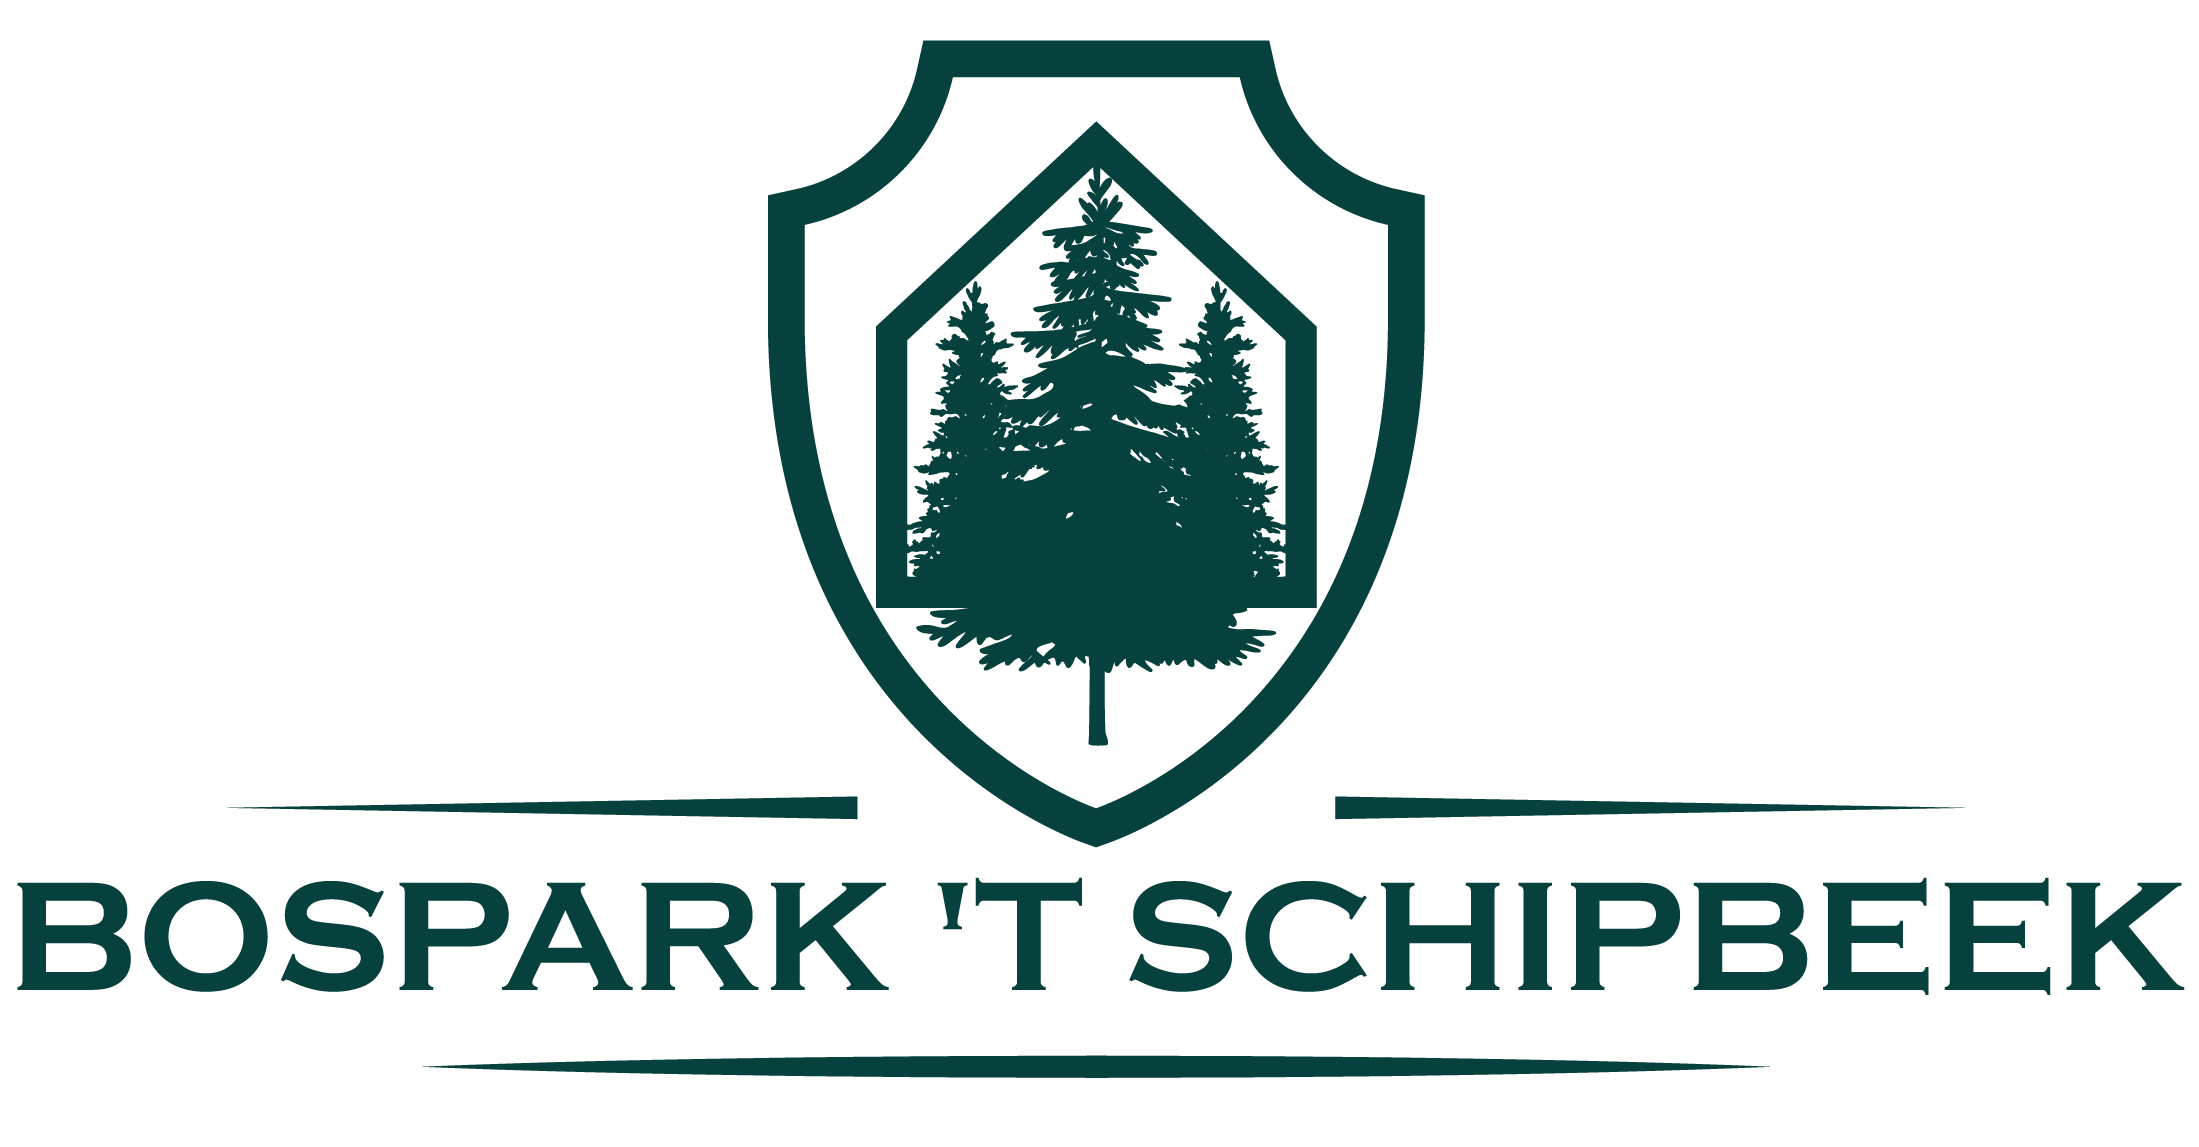 Bospark 't Schipbeek - Kleinschalig investeren